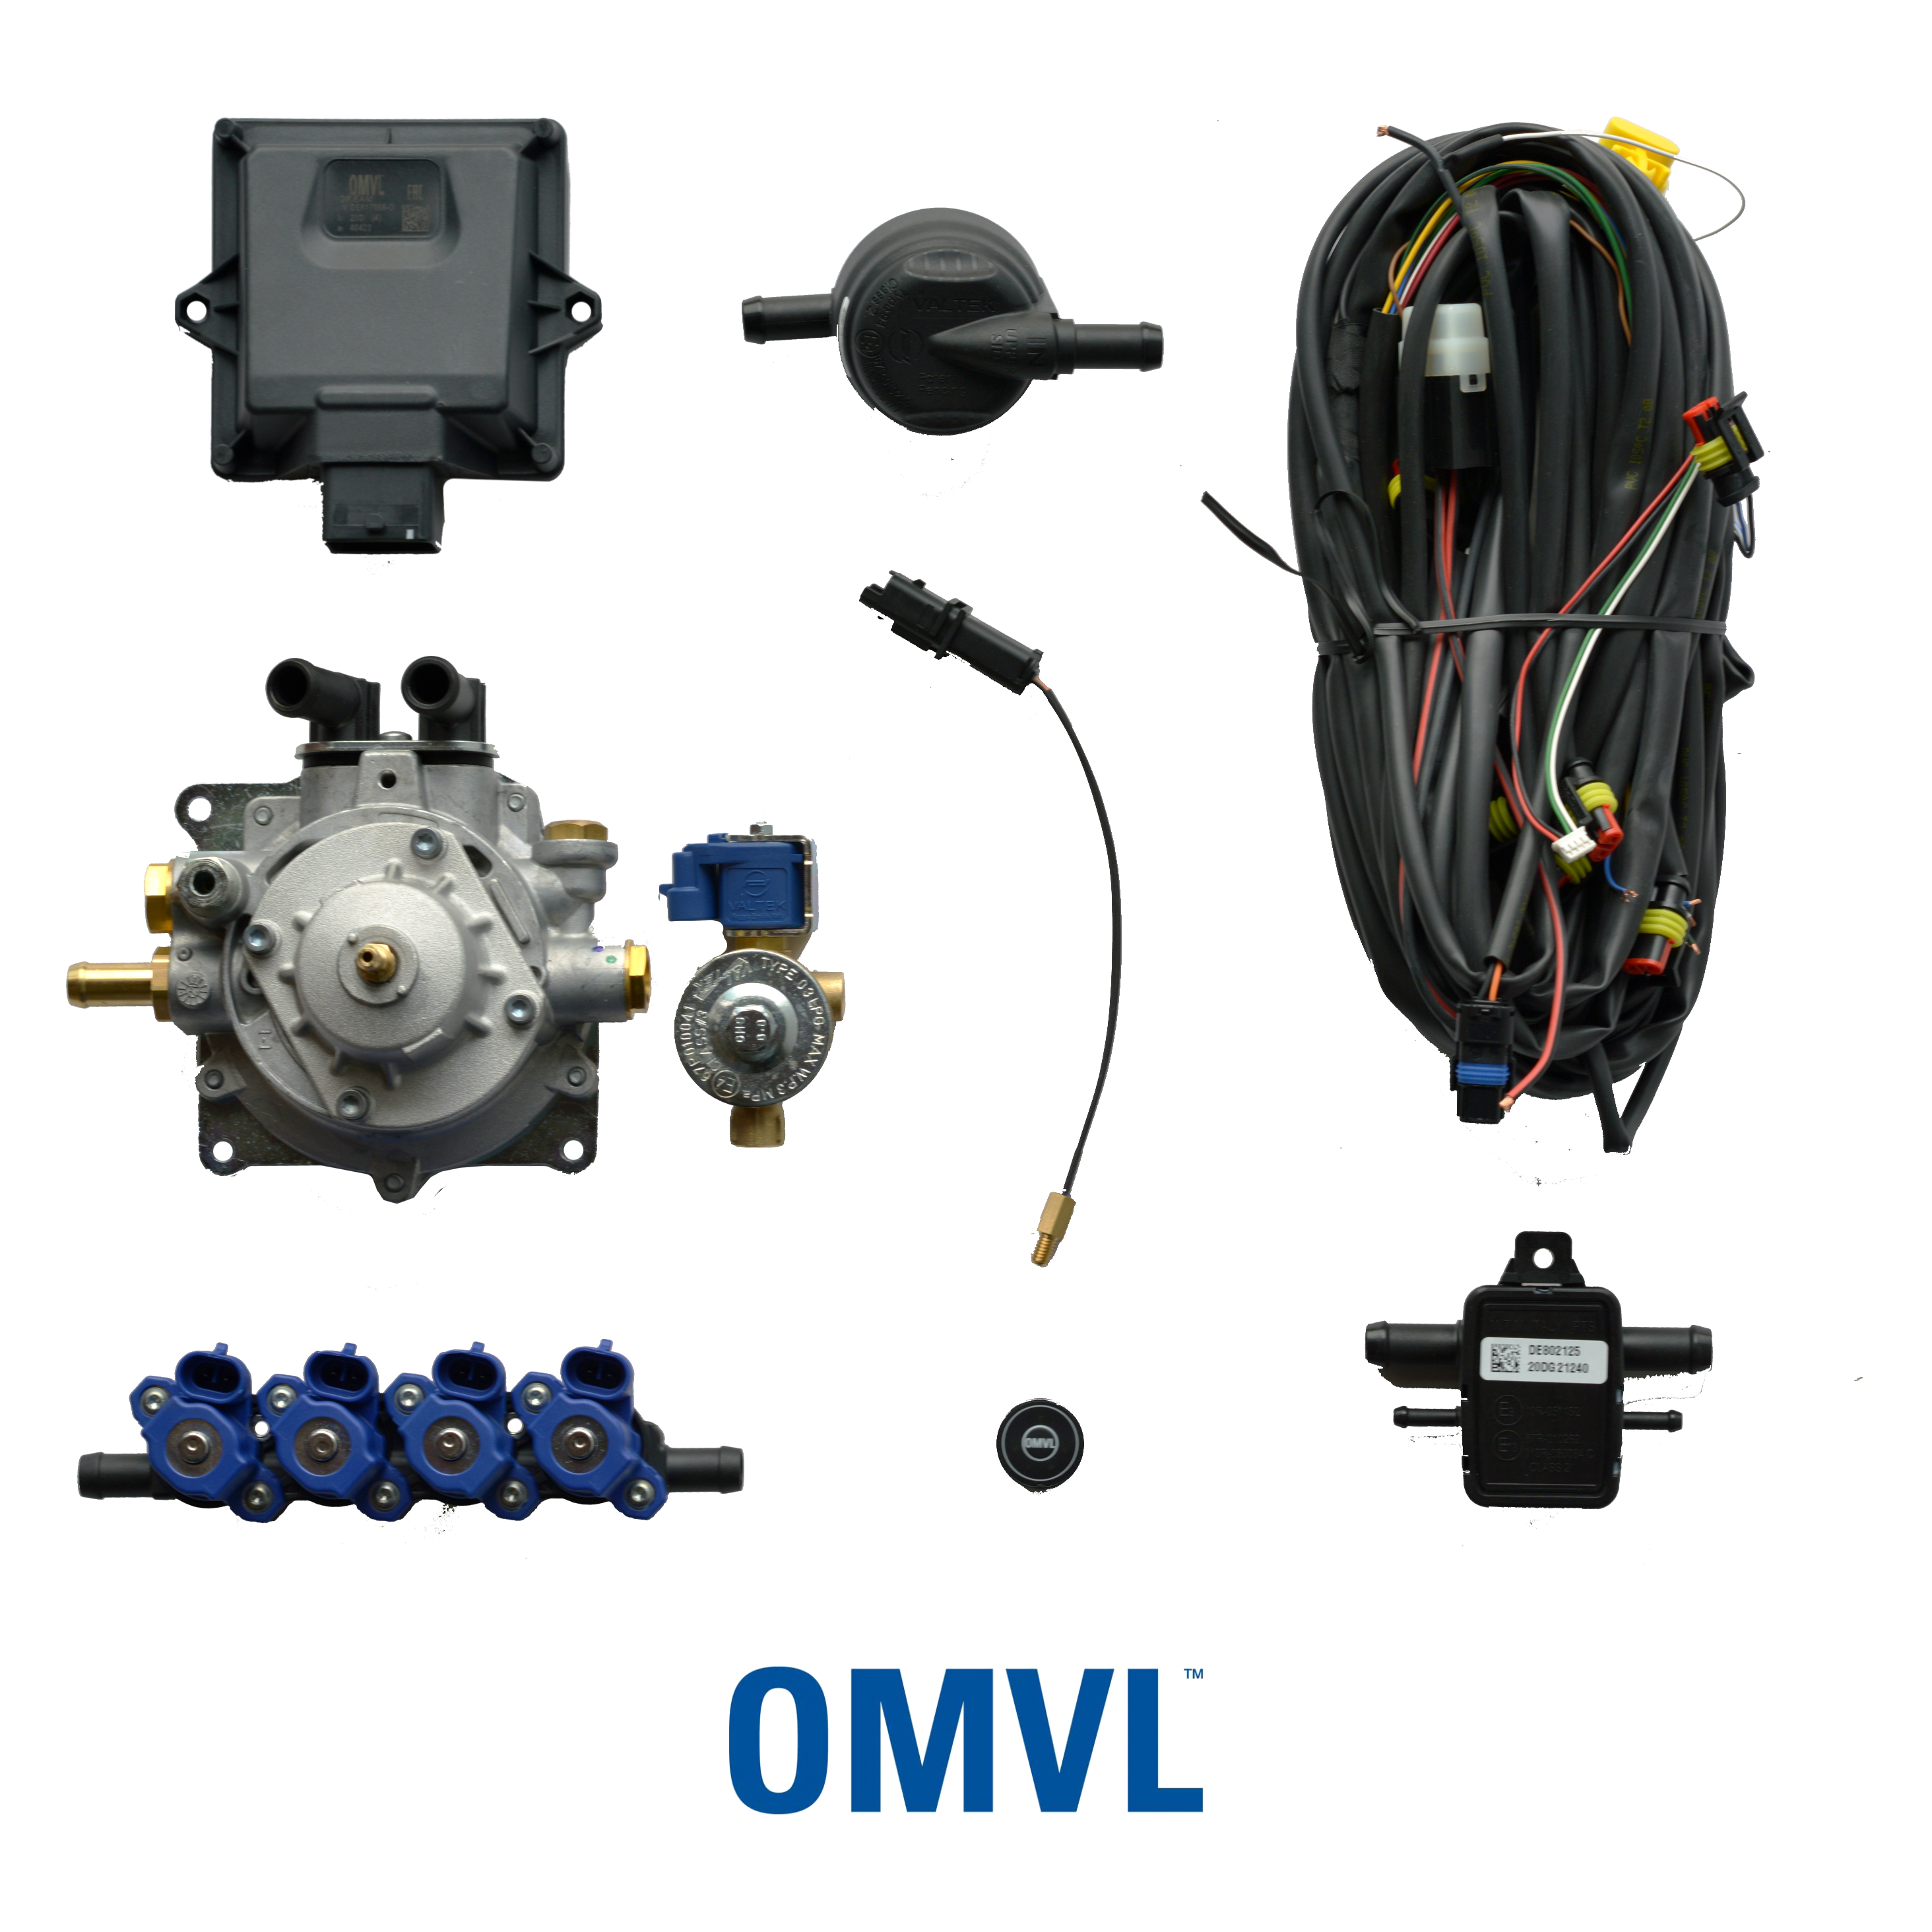 Omvl new dream. OMVL Saver-4 (CPR 110 КВТ С SL). OMVL Dream XXI газовое оборудование 4 поколения. Комплект ГБО OMVL Dream XXI. OMVL газовое оборудование ei-04e ремкомплект.